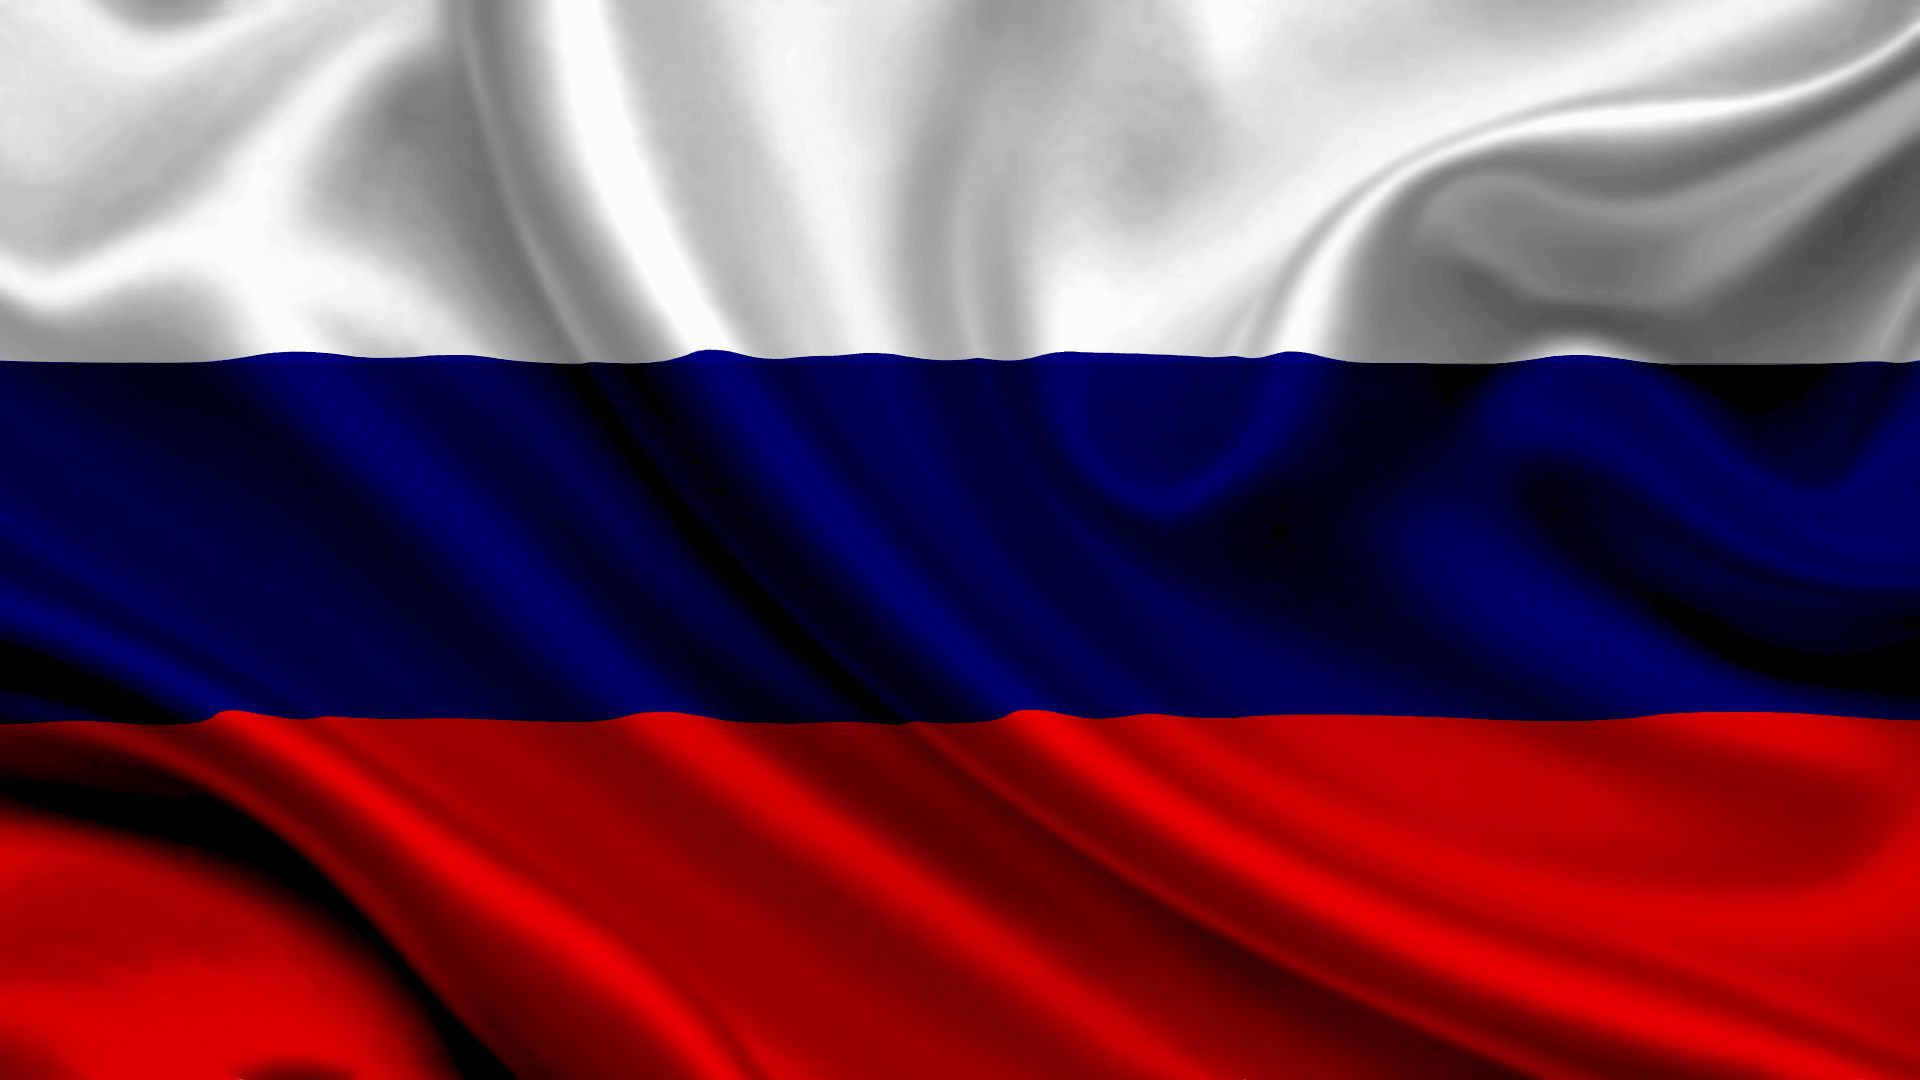 ава пабг с флагом россии фото 25